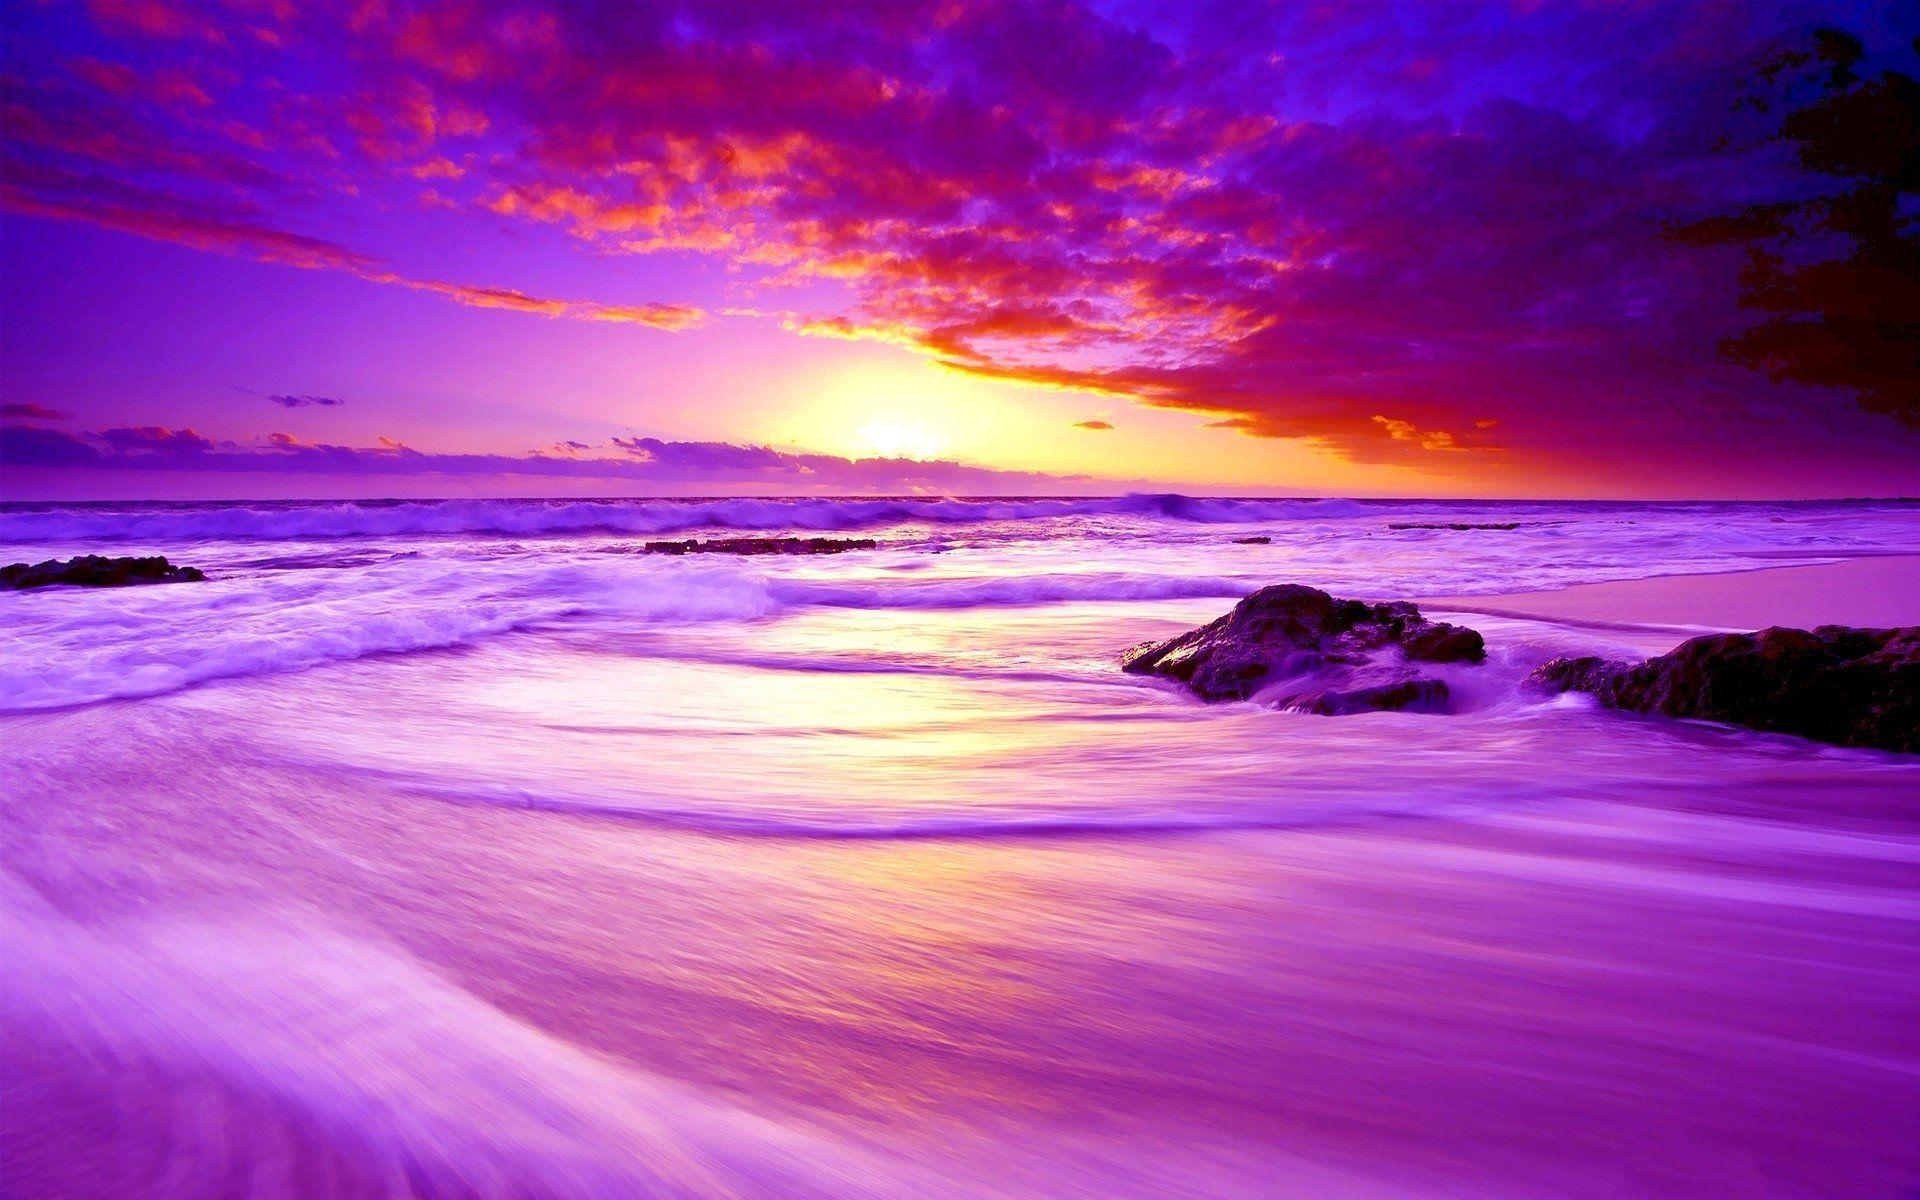 Beach Sunset Purple Wallpapers Top Free Beach Sunset Purple